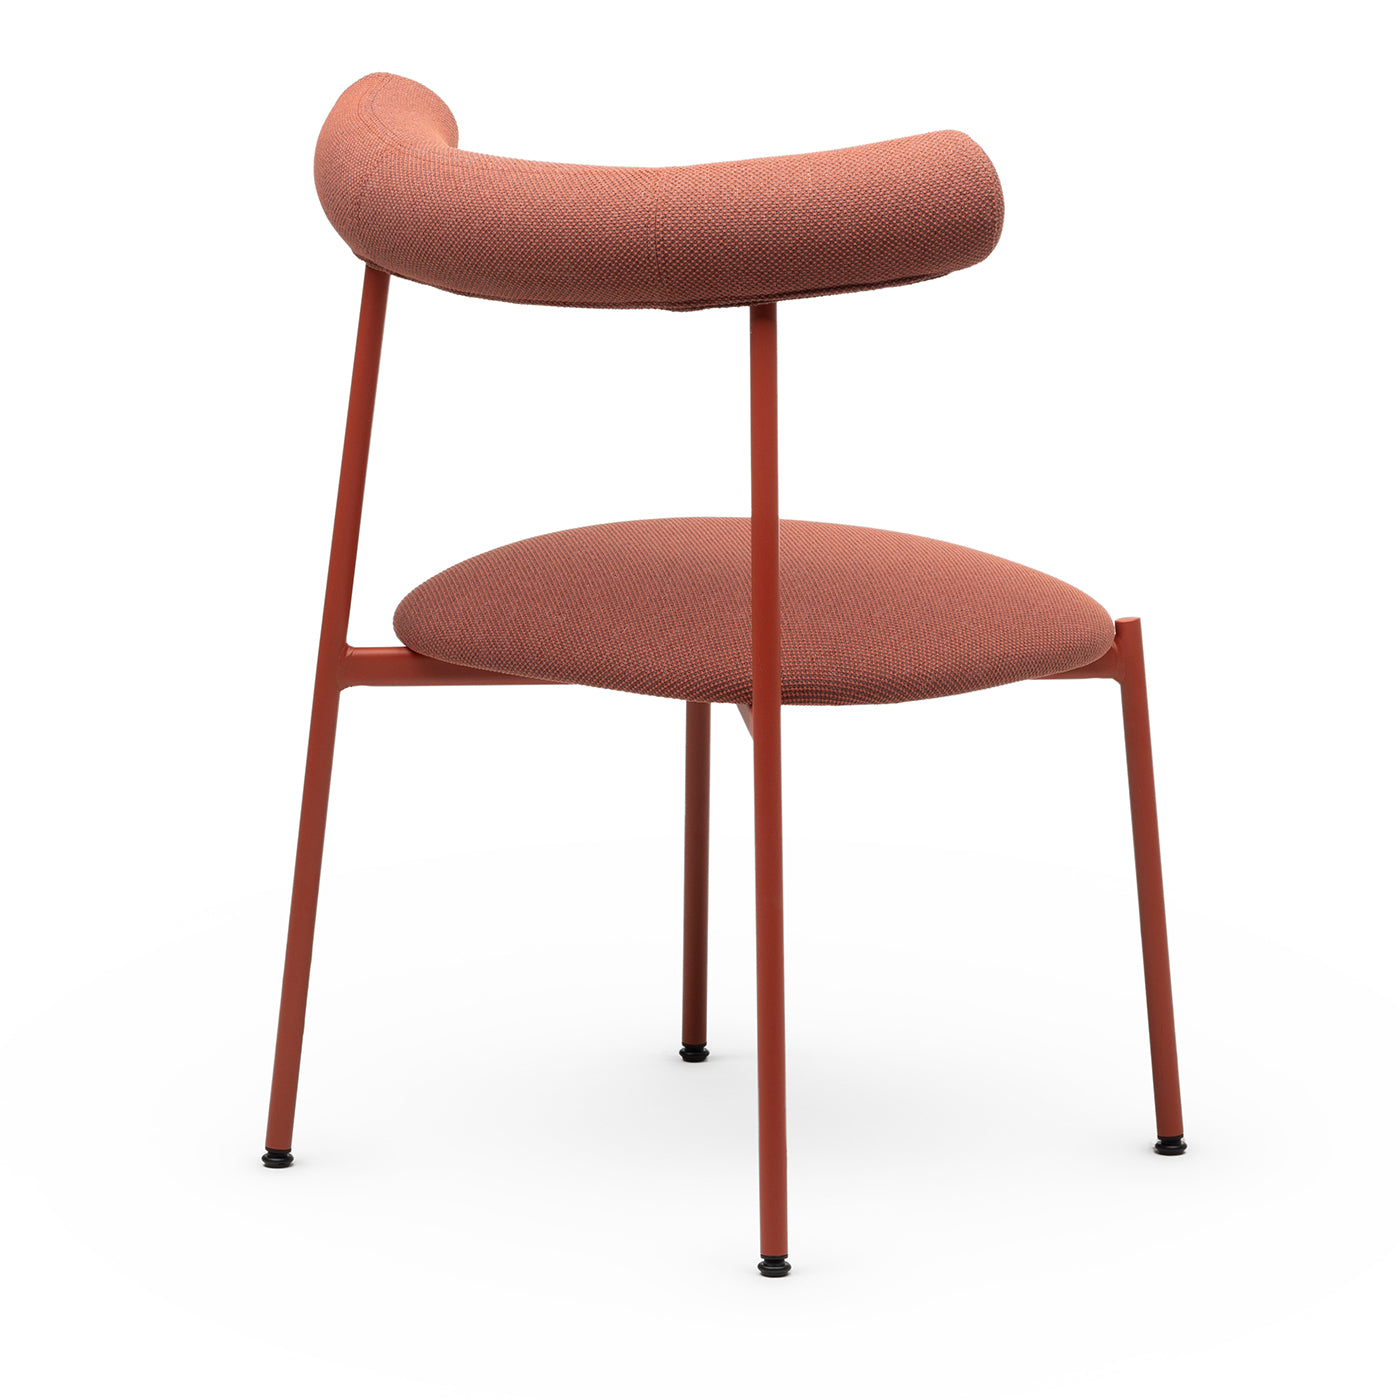 Pampa S Brick-Red Chair by Studio Pastina - Alternative view 1